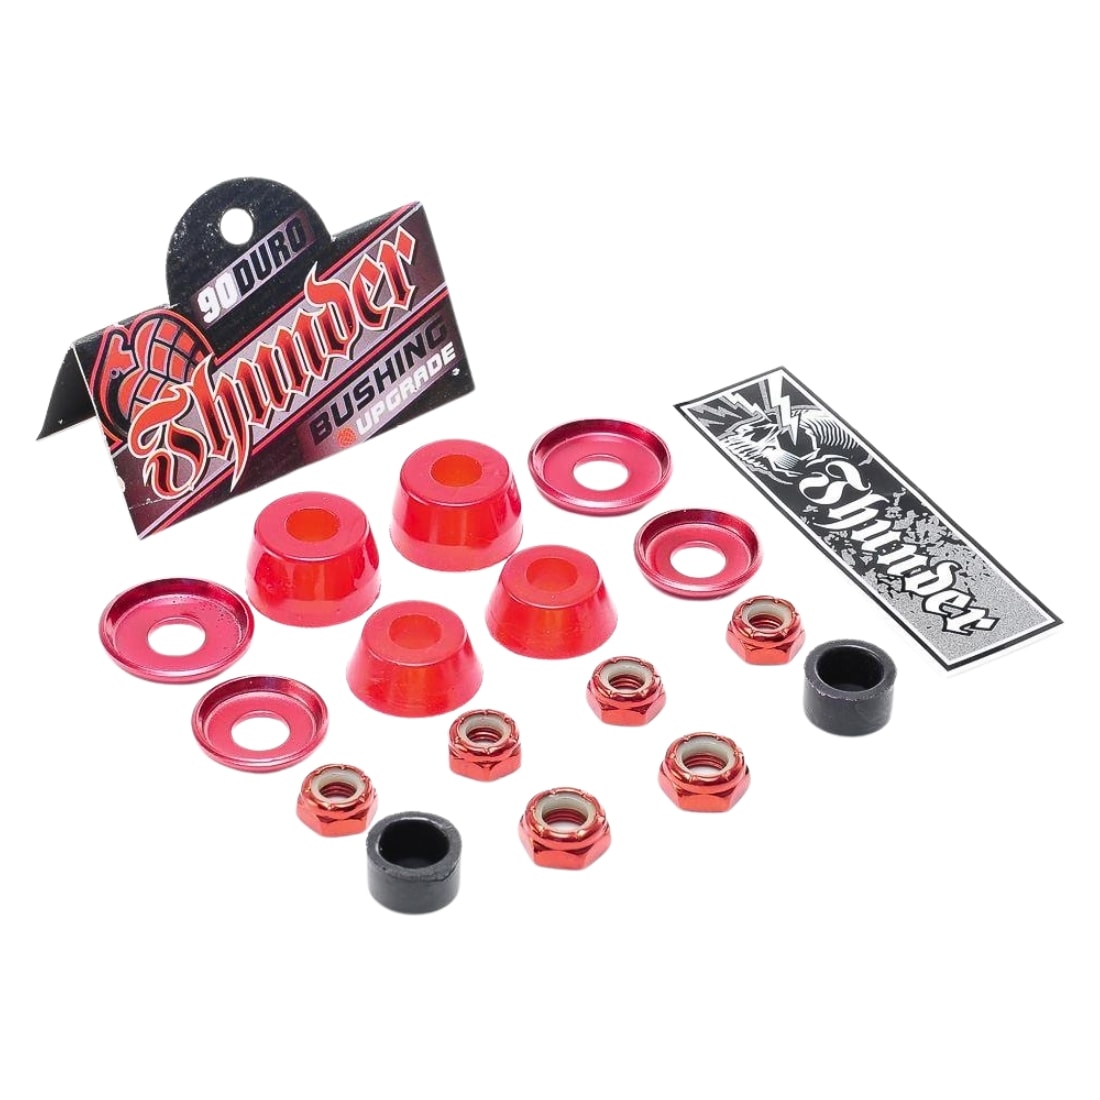 Thunder 90 Duro Rebuild Kit (Bushings/Nuts/Pivot Cup/Washers) - Red - Skateboard Bushings by Thunder